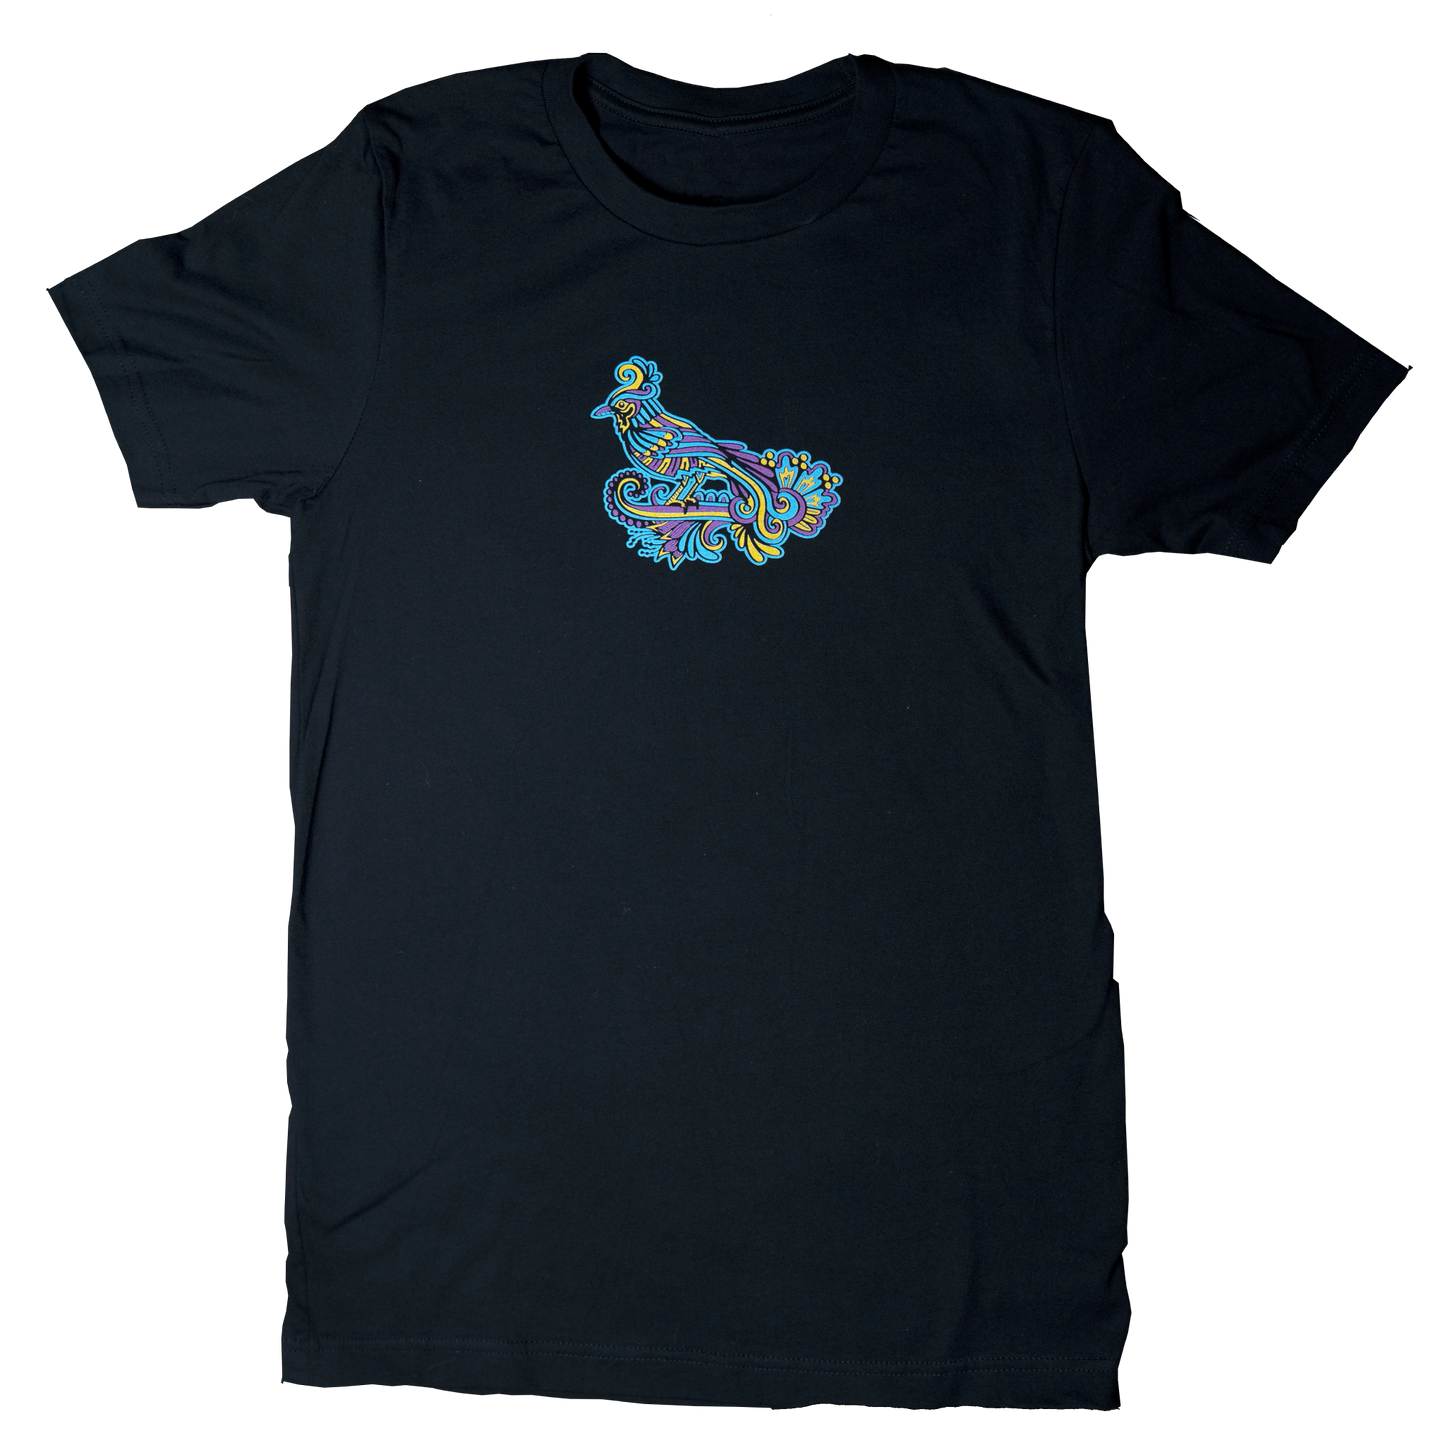 Cosmic Cuckoo Clock T-Shirt